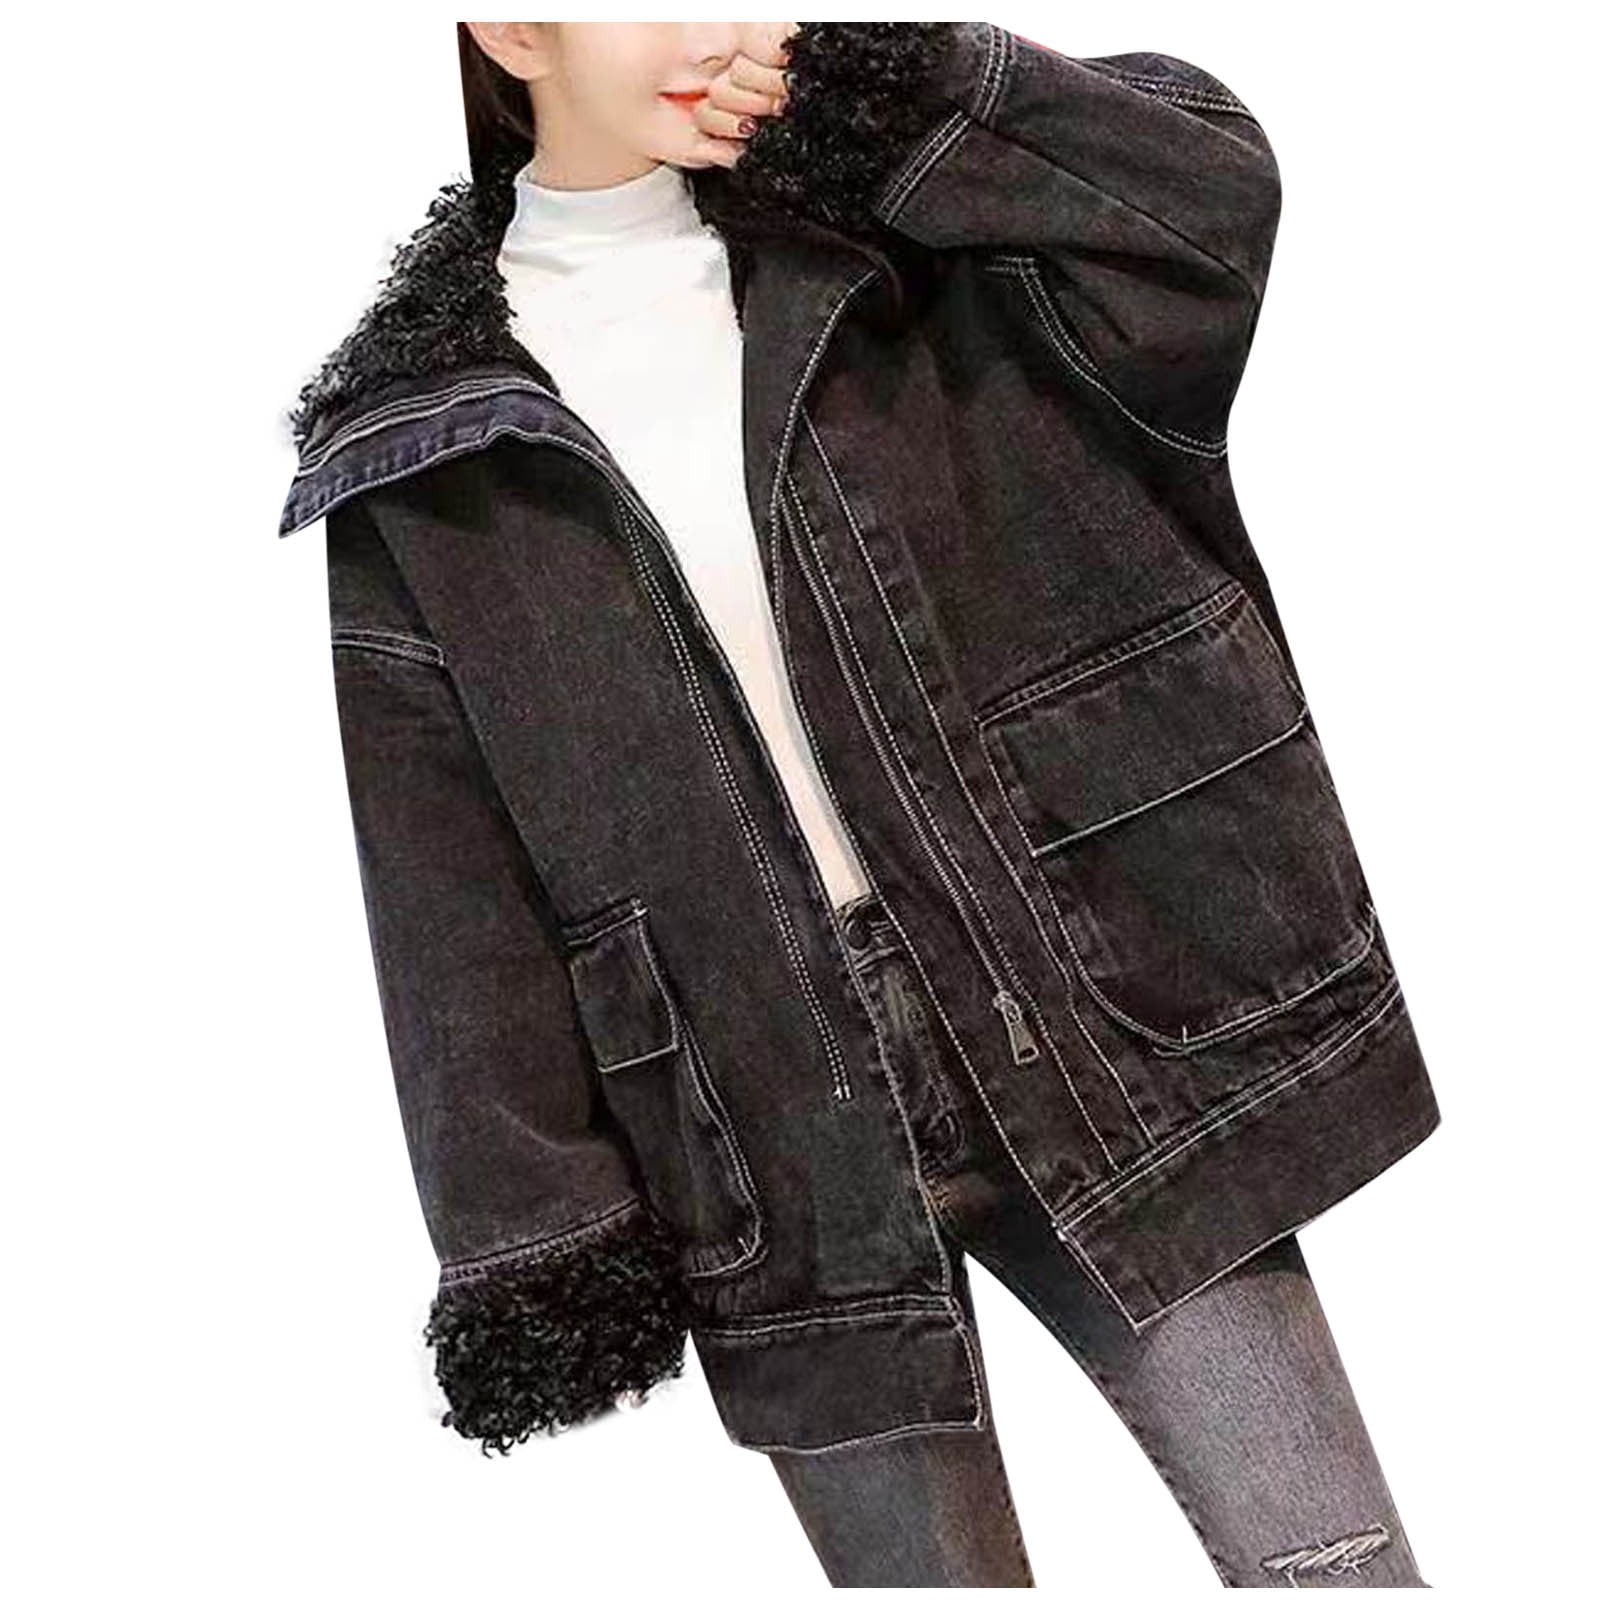 Qiaocaity Women Winter Warm Coats Fashion Women Casual Cowboy Pockets Long Sleeve Thickened Tops Jacket Coat, Fall Fashion 2022 Clearance Deals! Black - Walmart.com